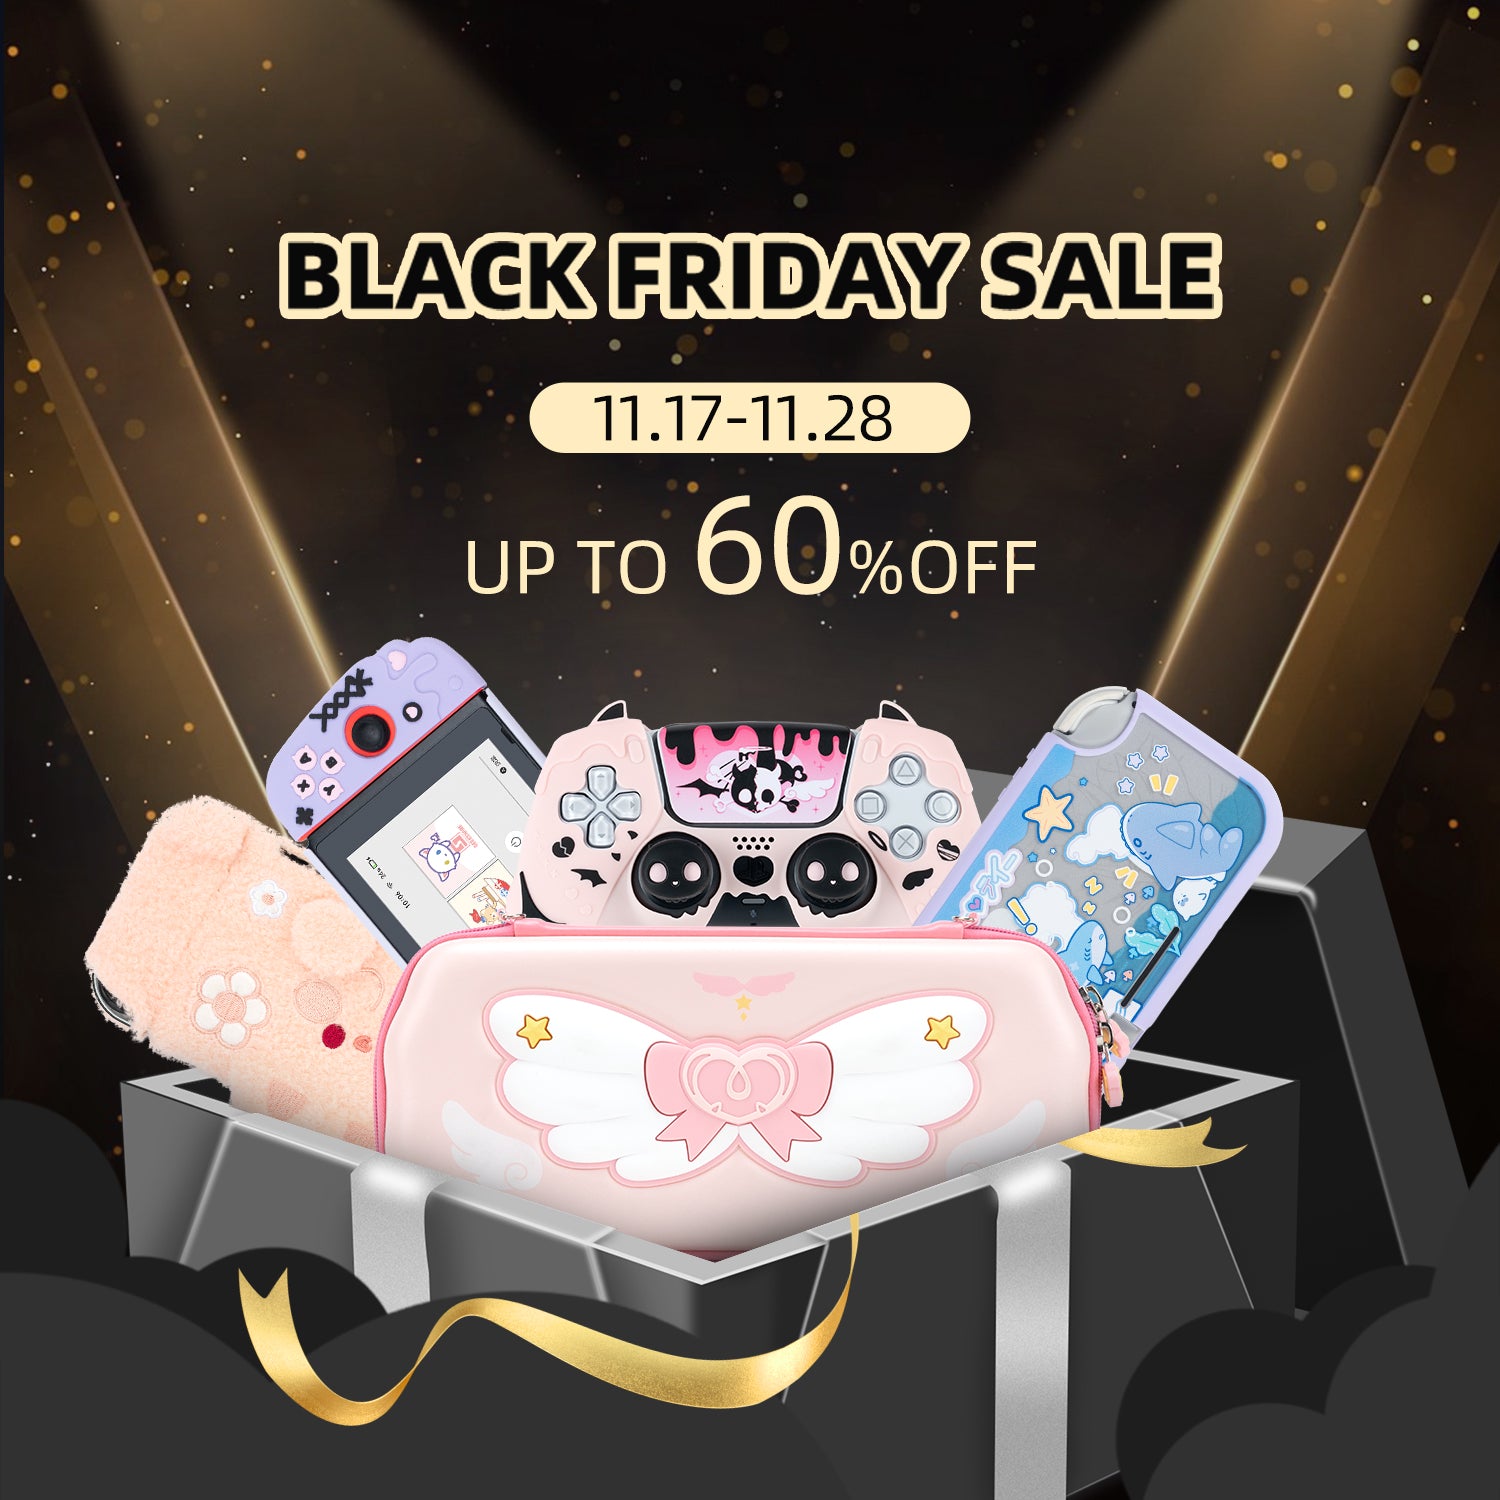 Shop Till You Drop During GeekShare’s Black Friday Sale!